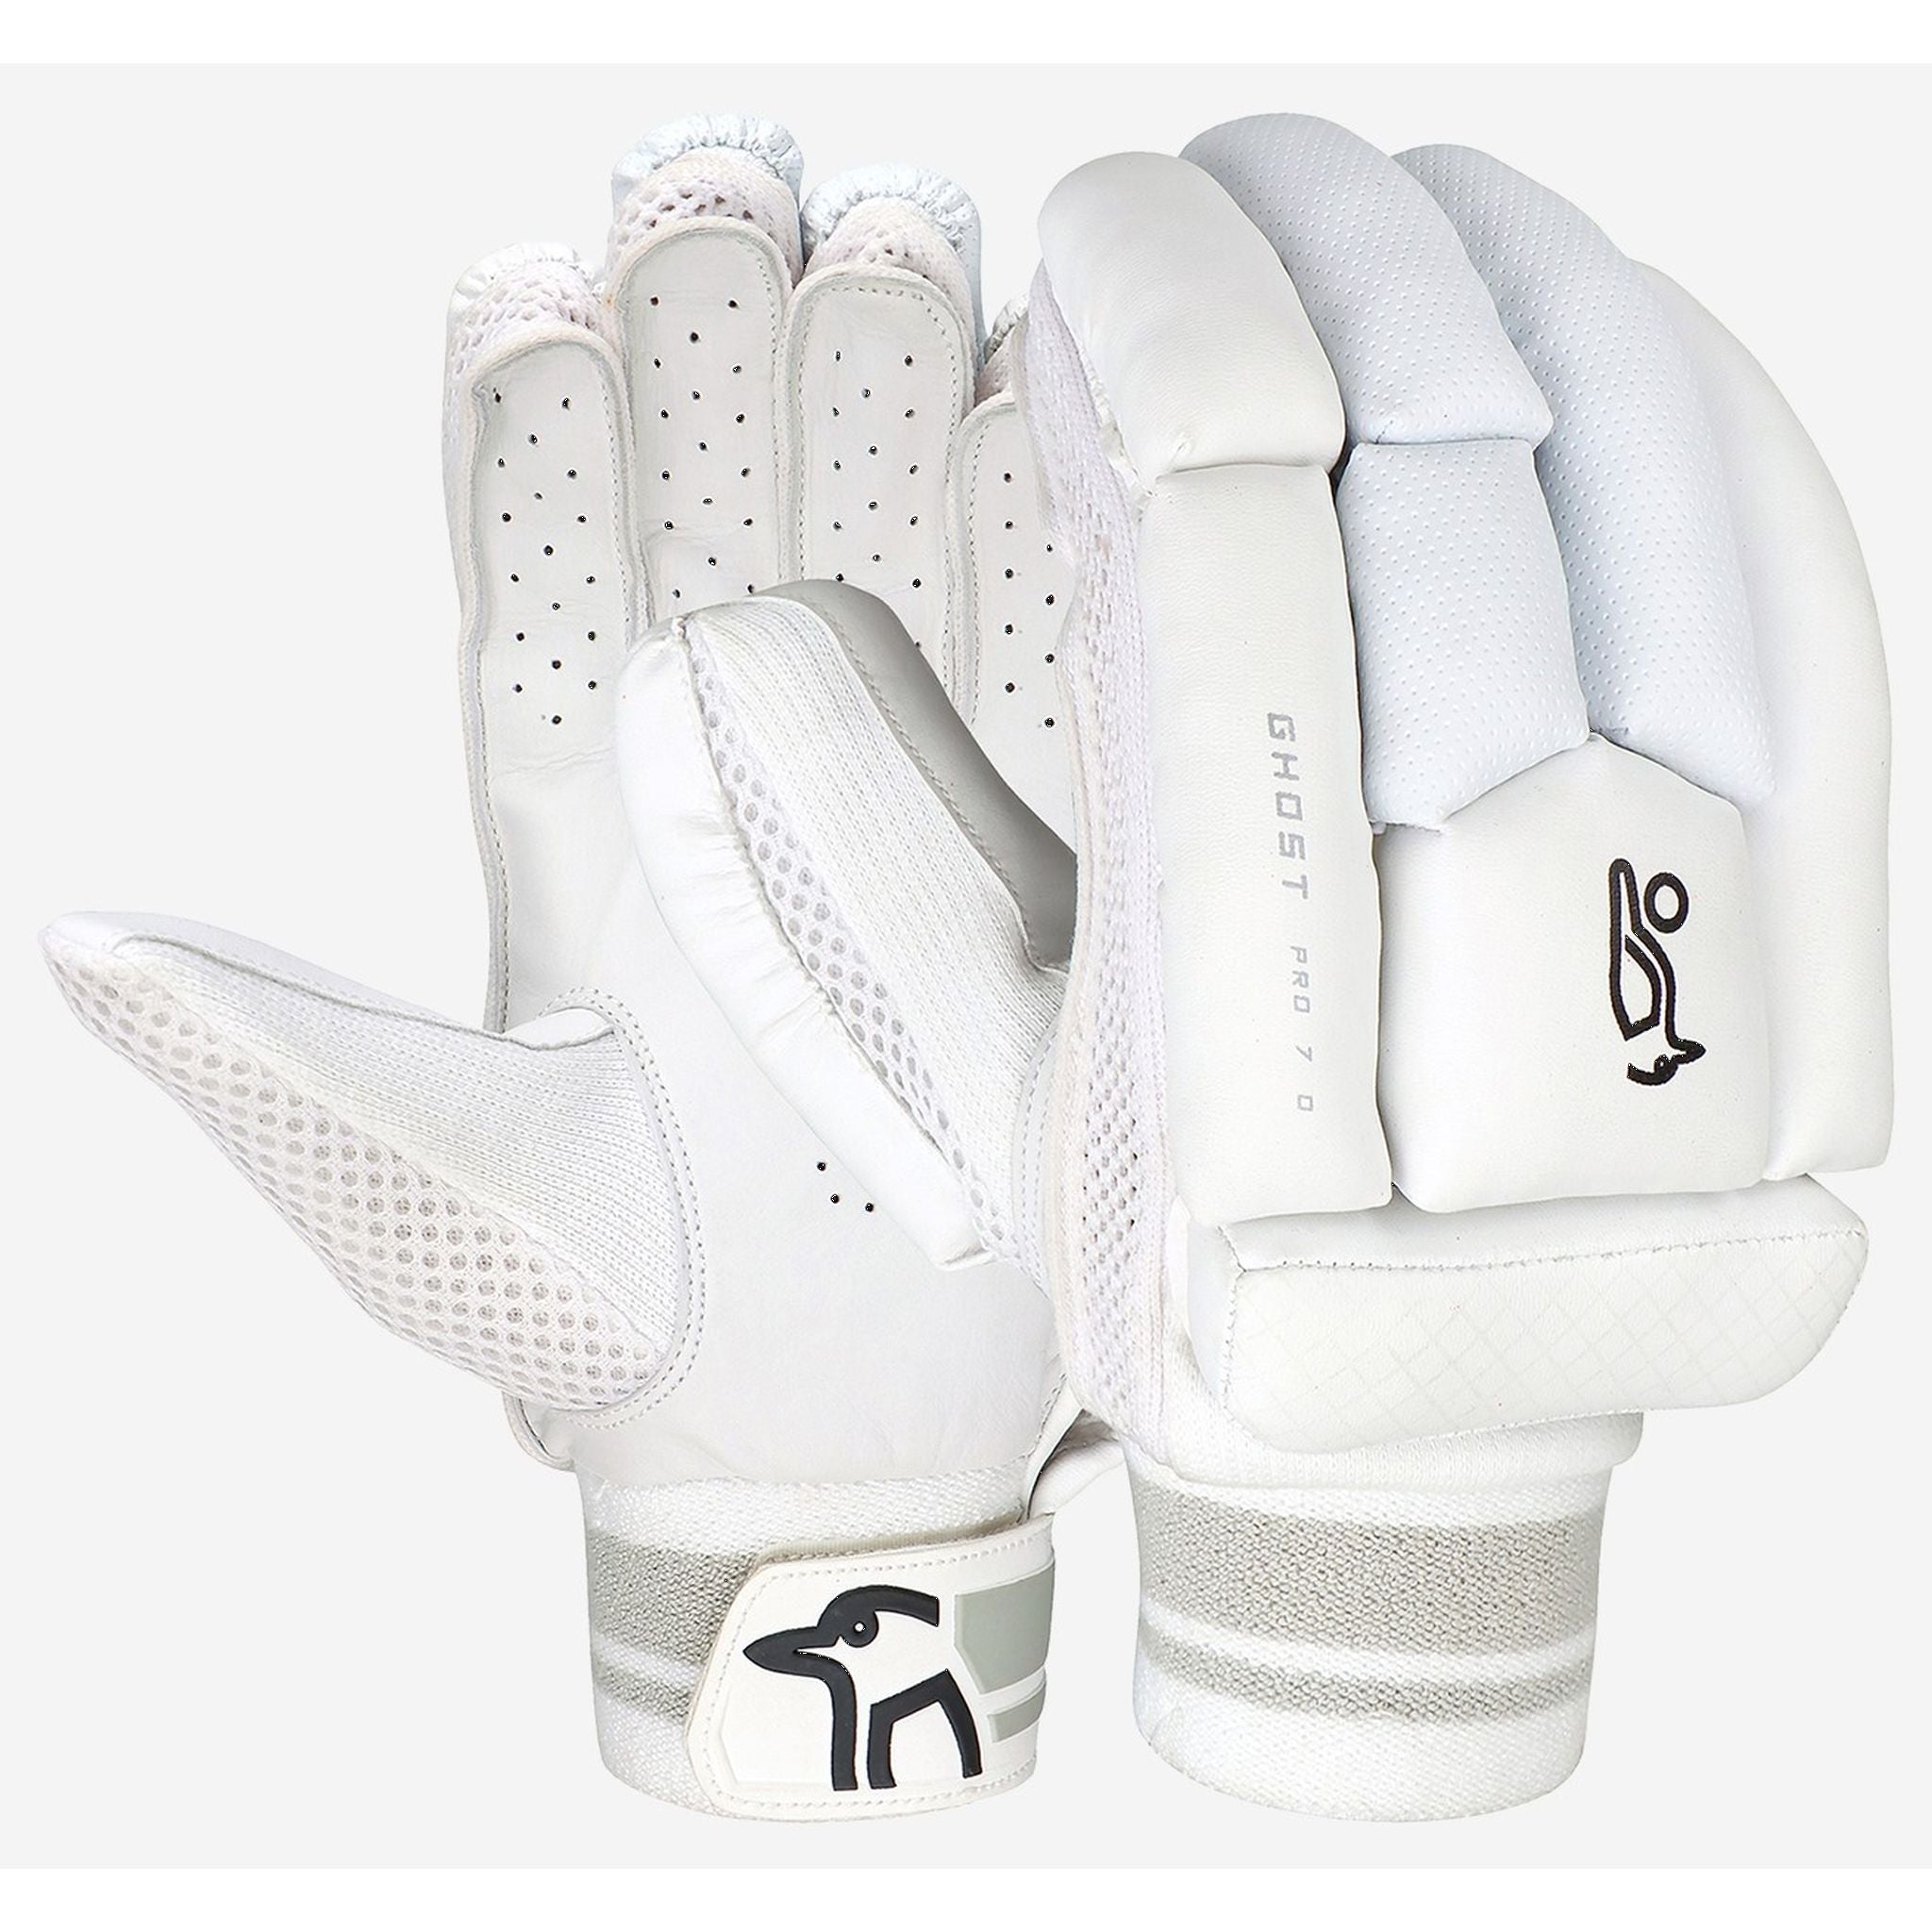 Kookaburra Ghost Pro 7.0 Junior Batting Gloves